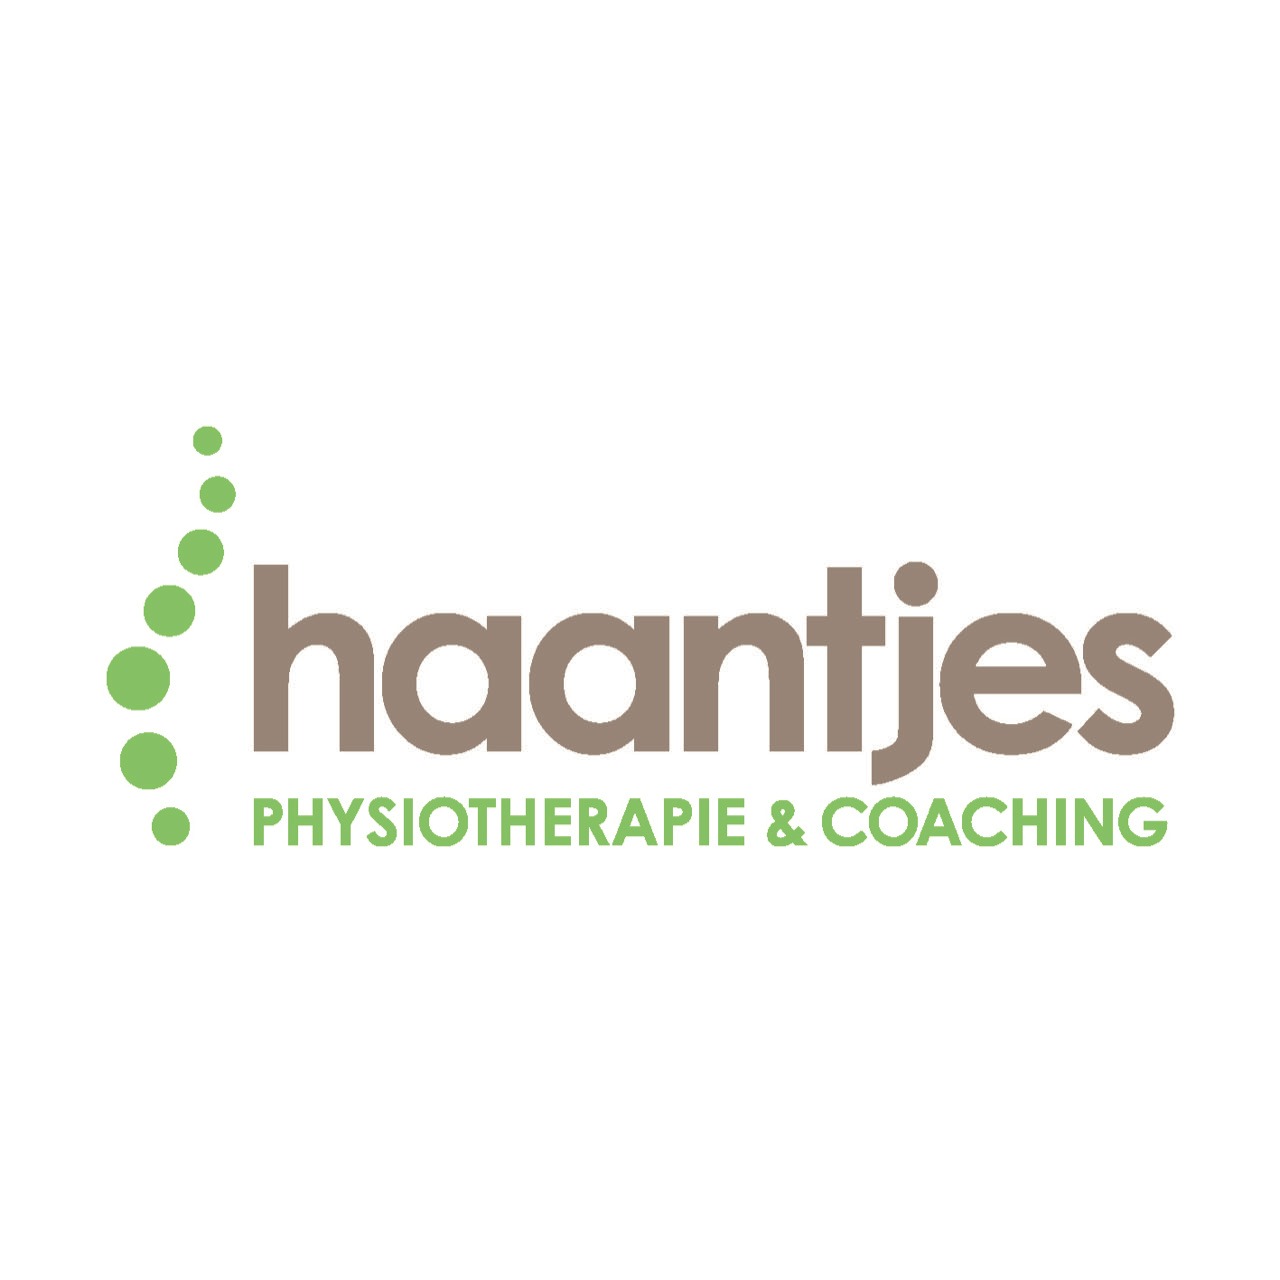 Haantjes Physiotherapie & Coaching Logo